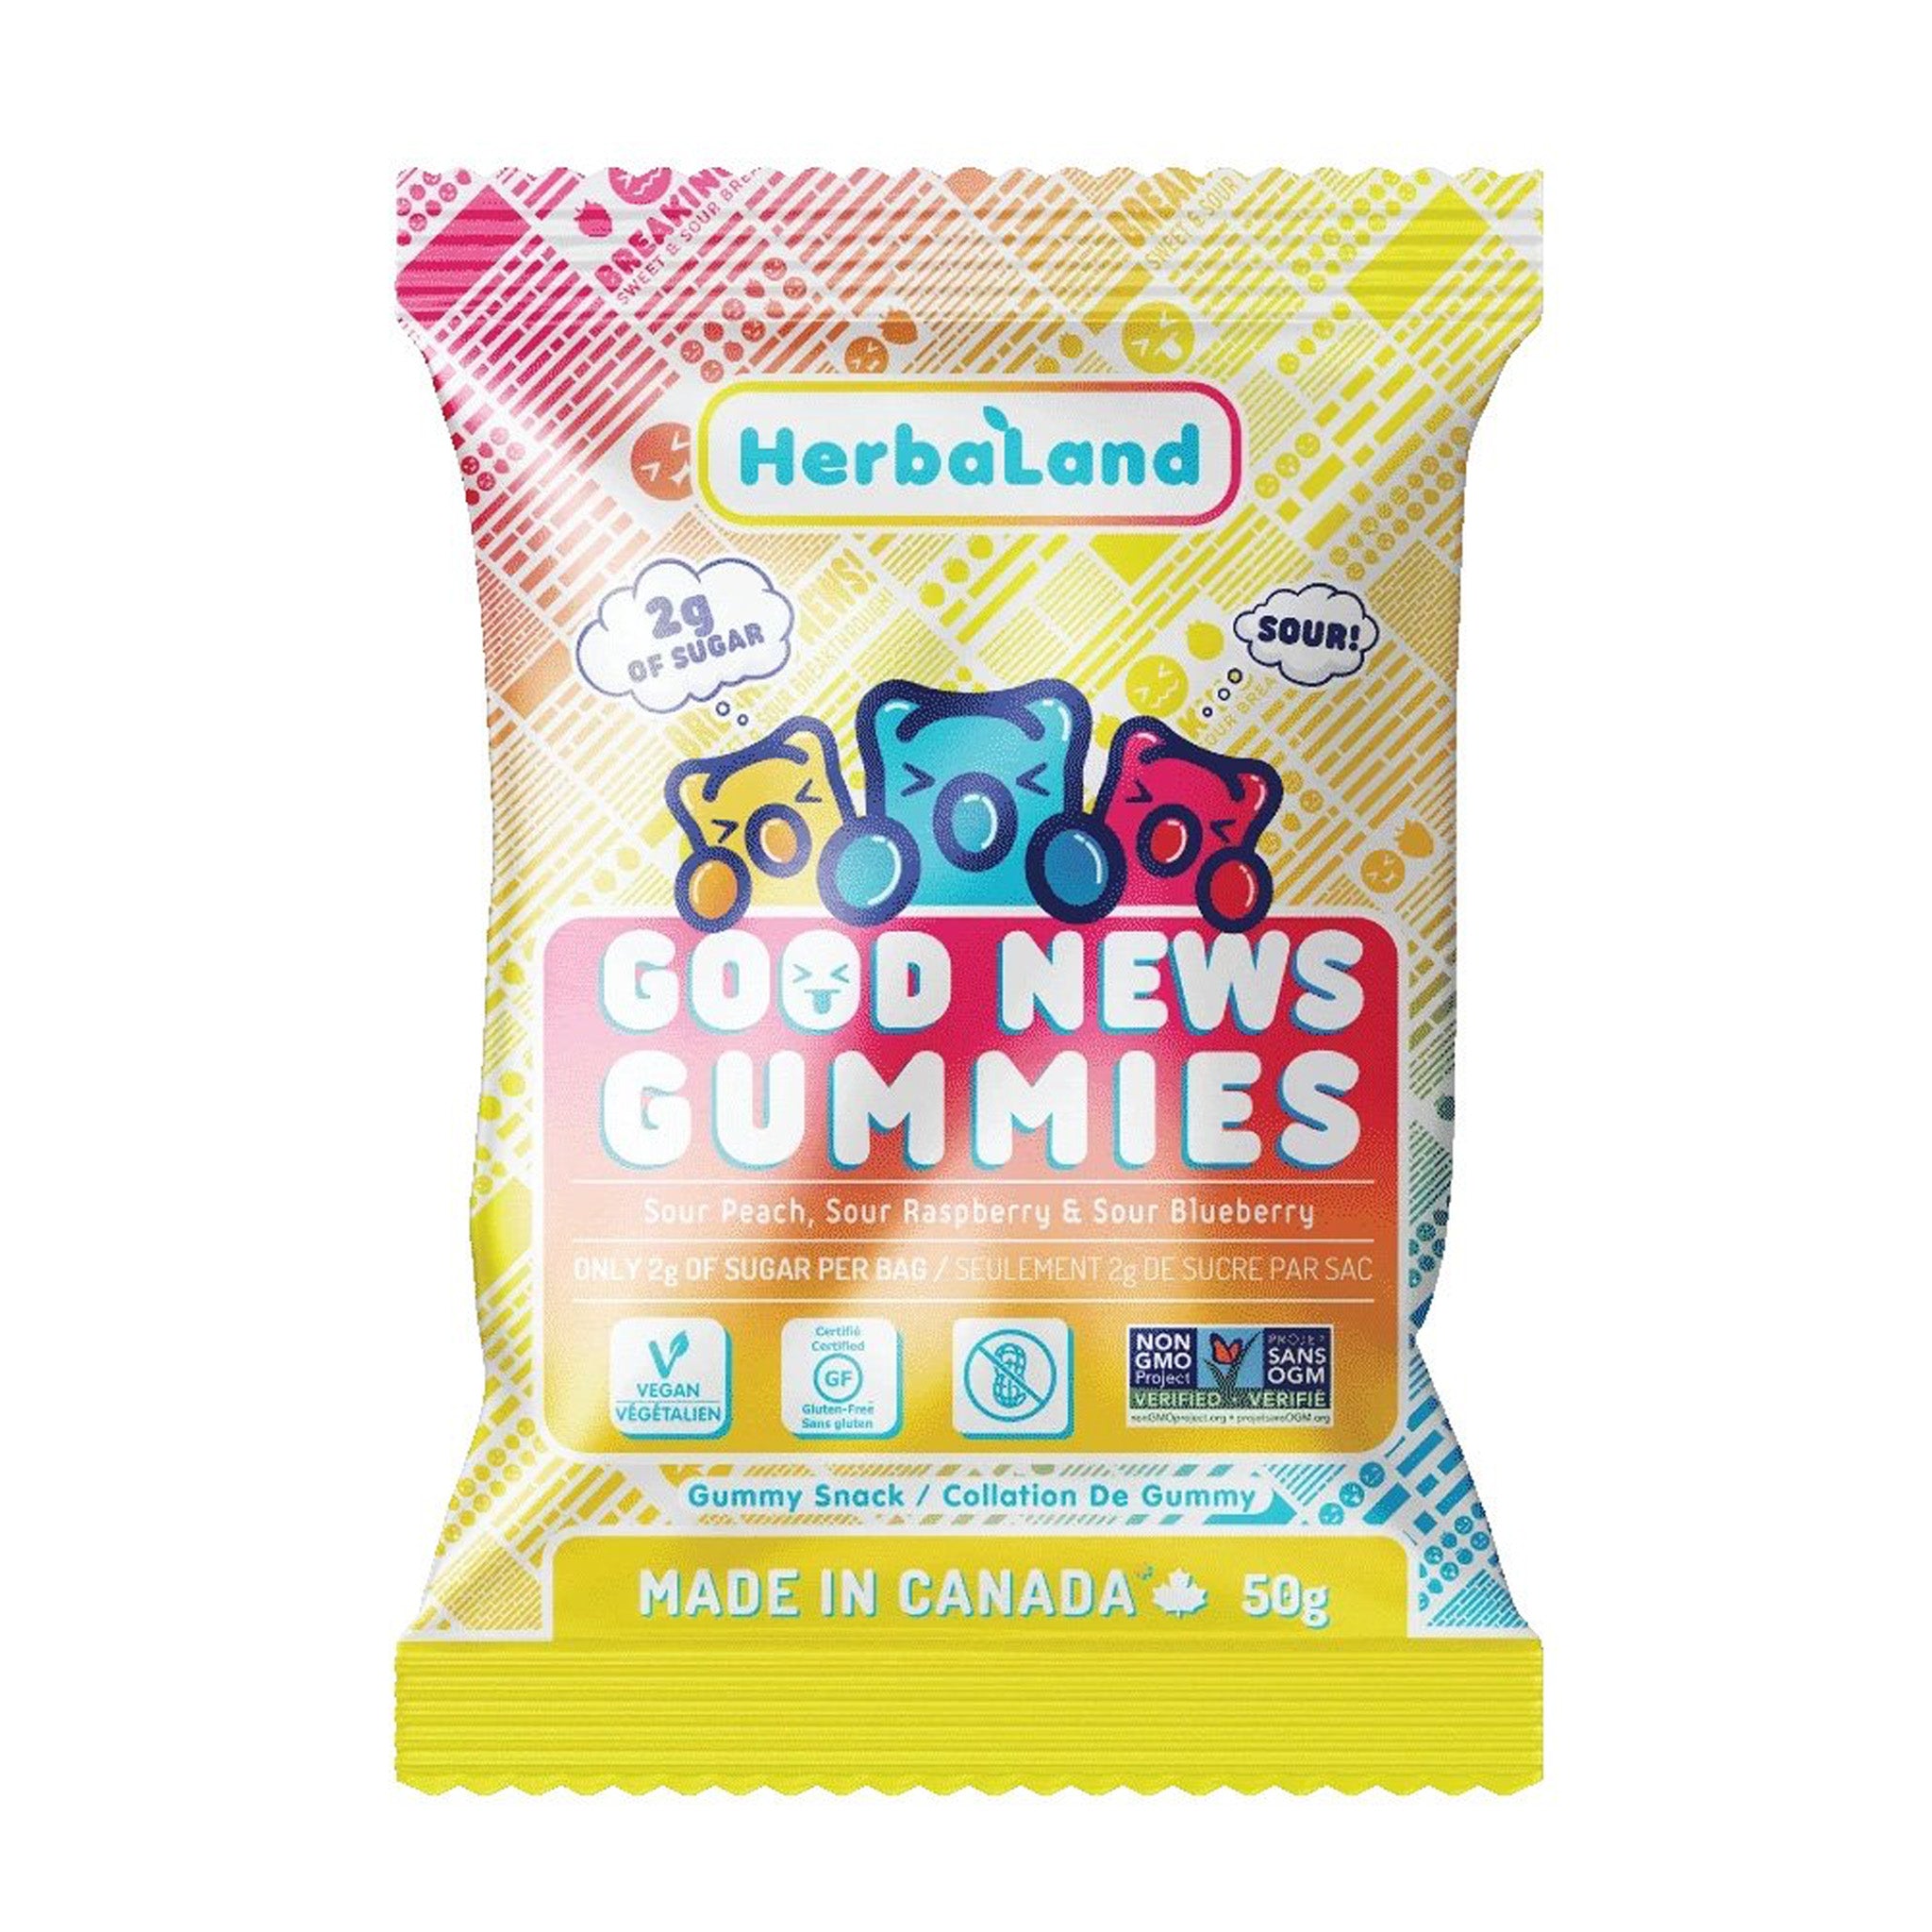 Good News Gummies (1 Pack)